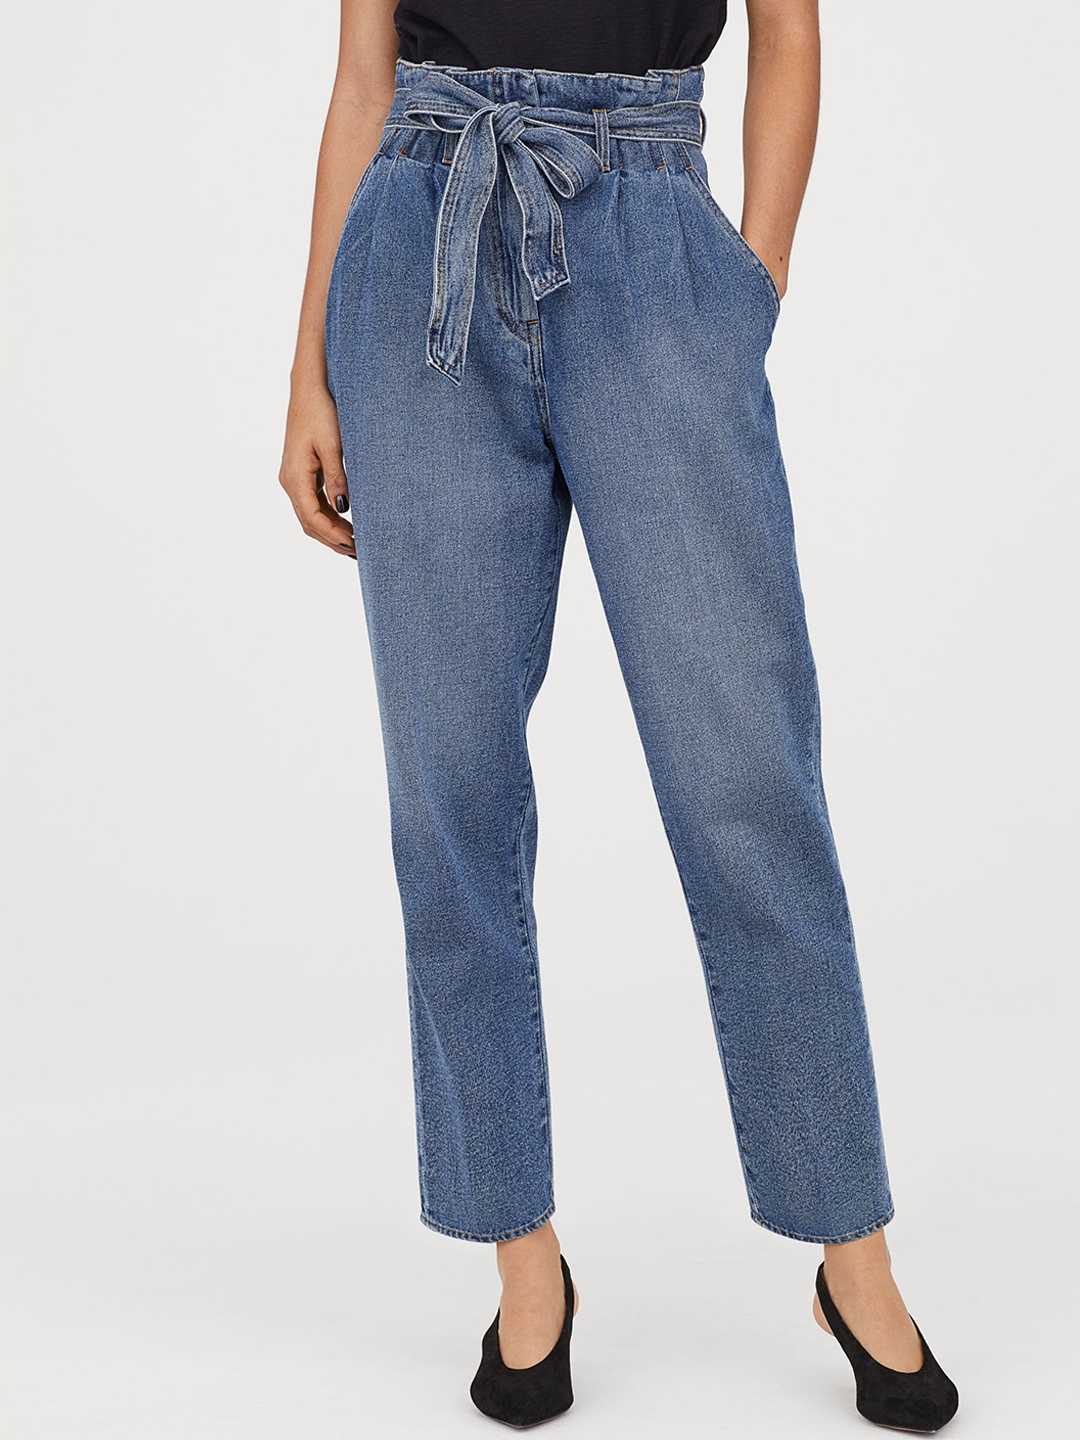 Buy H&M Women Blue Paper Bag Jeans - Jeans for Women 10477840 | Myntra